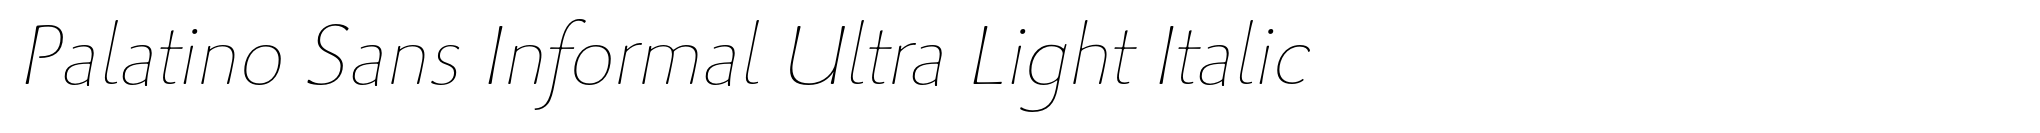 Palatino Sans Informal Ultra Light Italic image